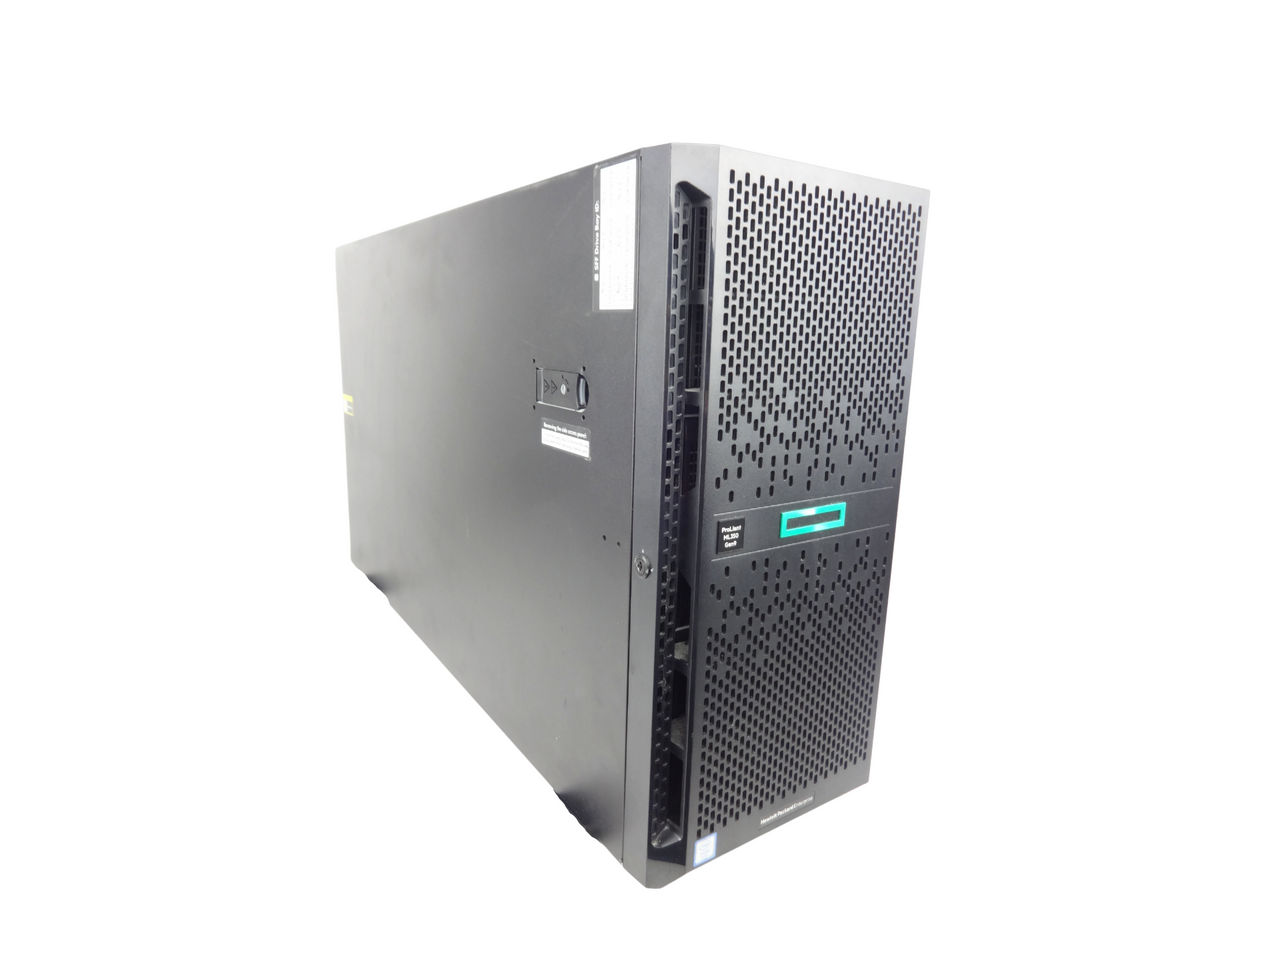 HPE Proliant ML350 G9 8x 2.5" Server Build to Order